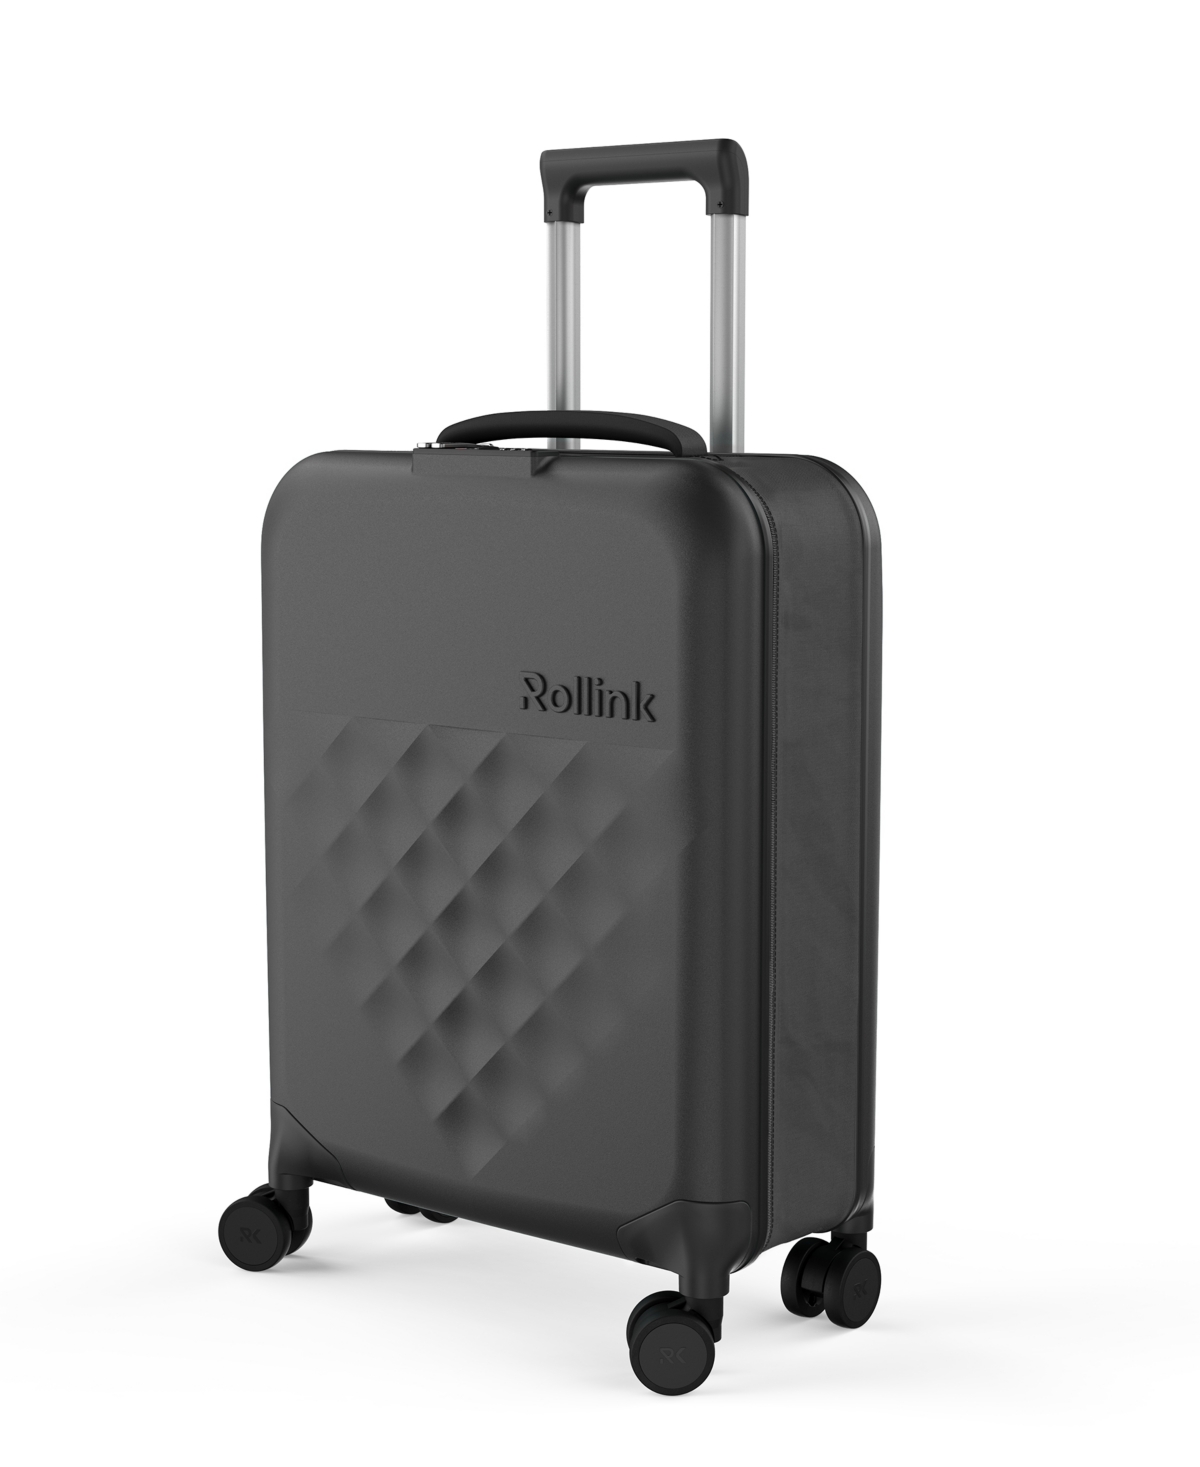 Rollink Flex 360 International 21" Carry-on Spinner Suitcase In Black